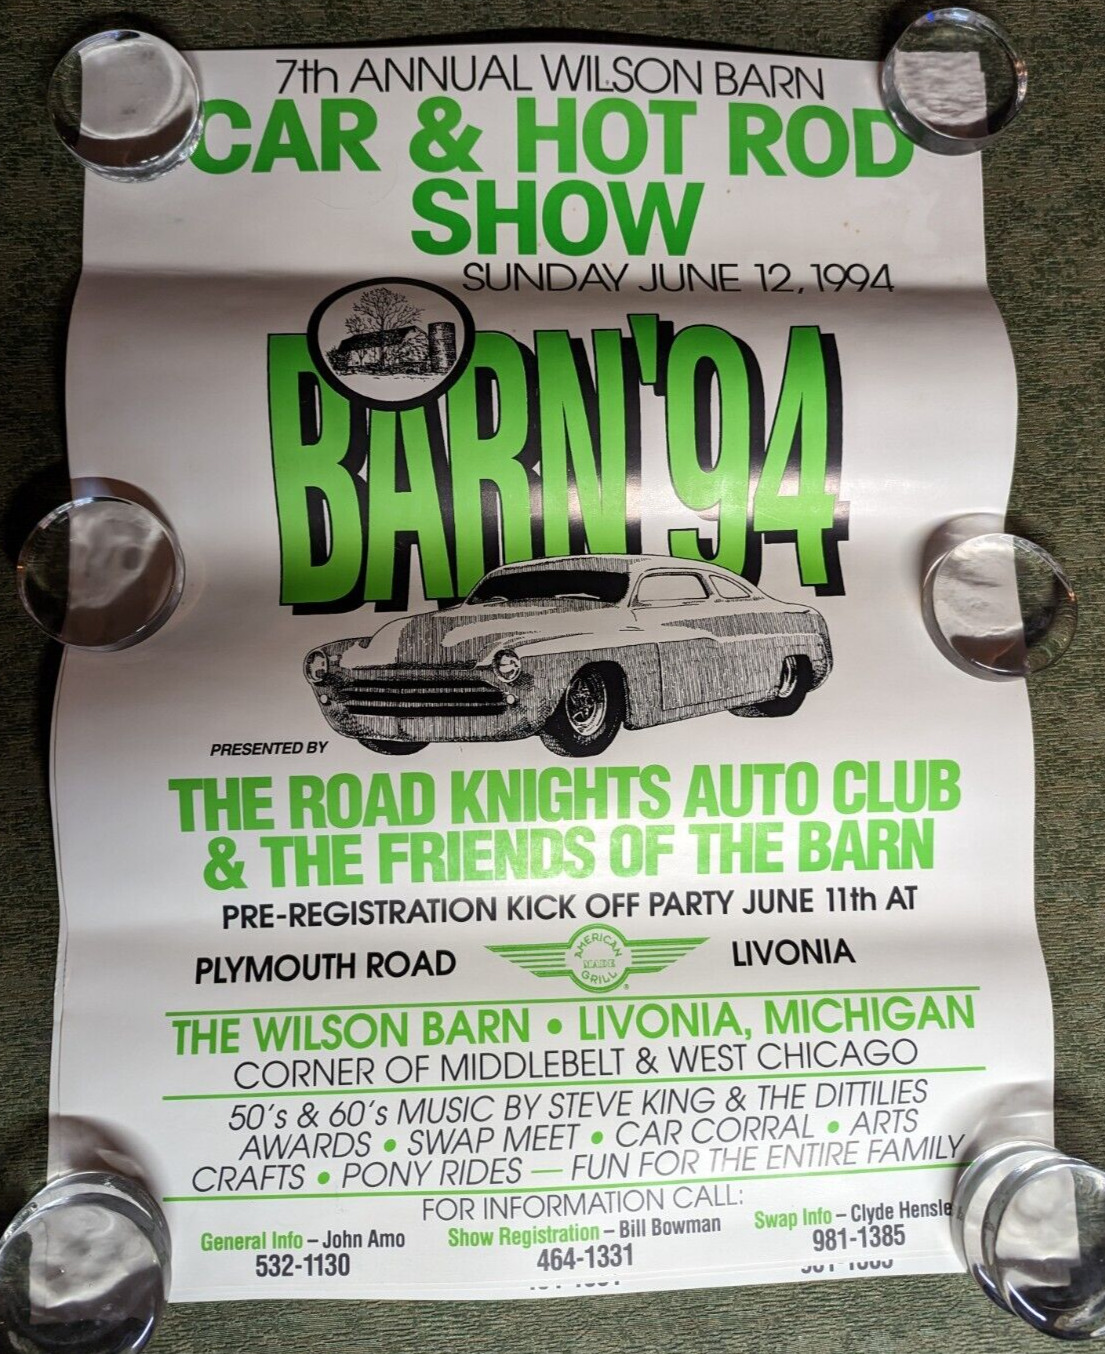 Wilson Barn 94 Car Show Swap Meet Livonia Michigan Poster Road Knights Auto Club